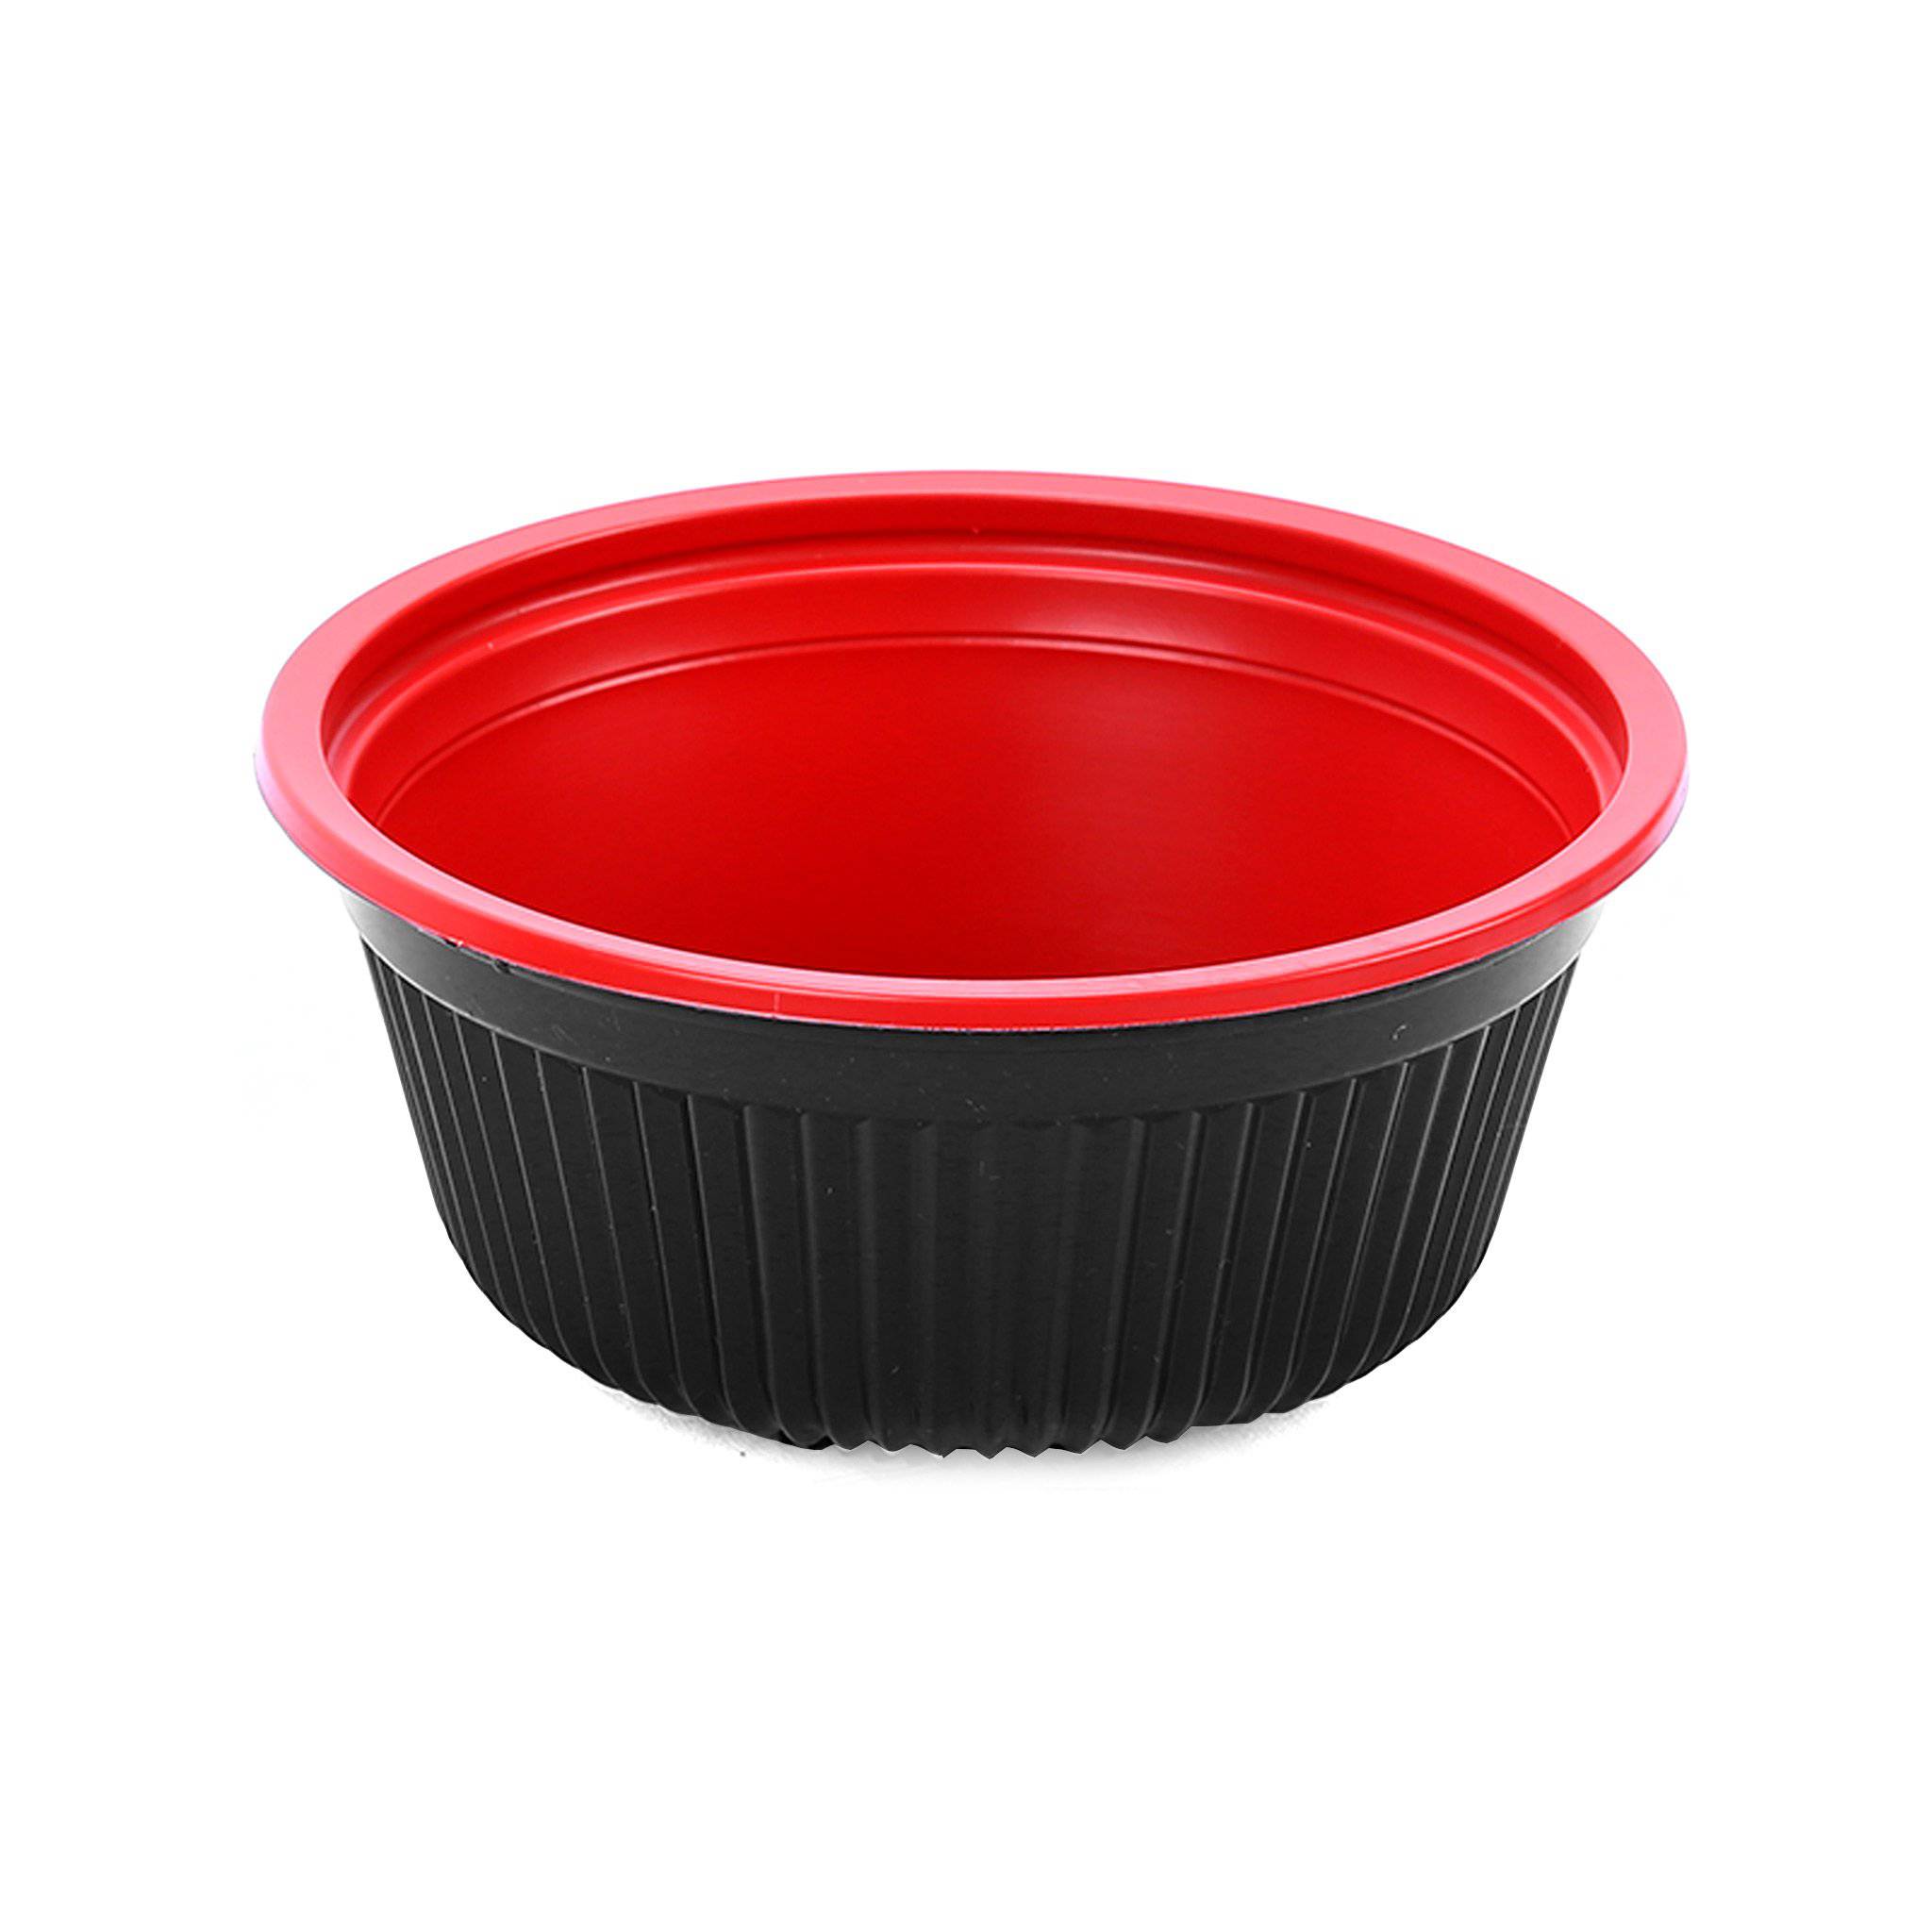 Red & Black Soup Bowl 700 Cc With Lids